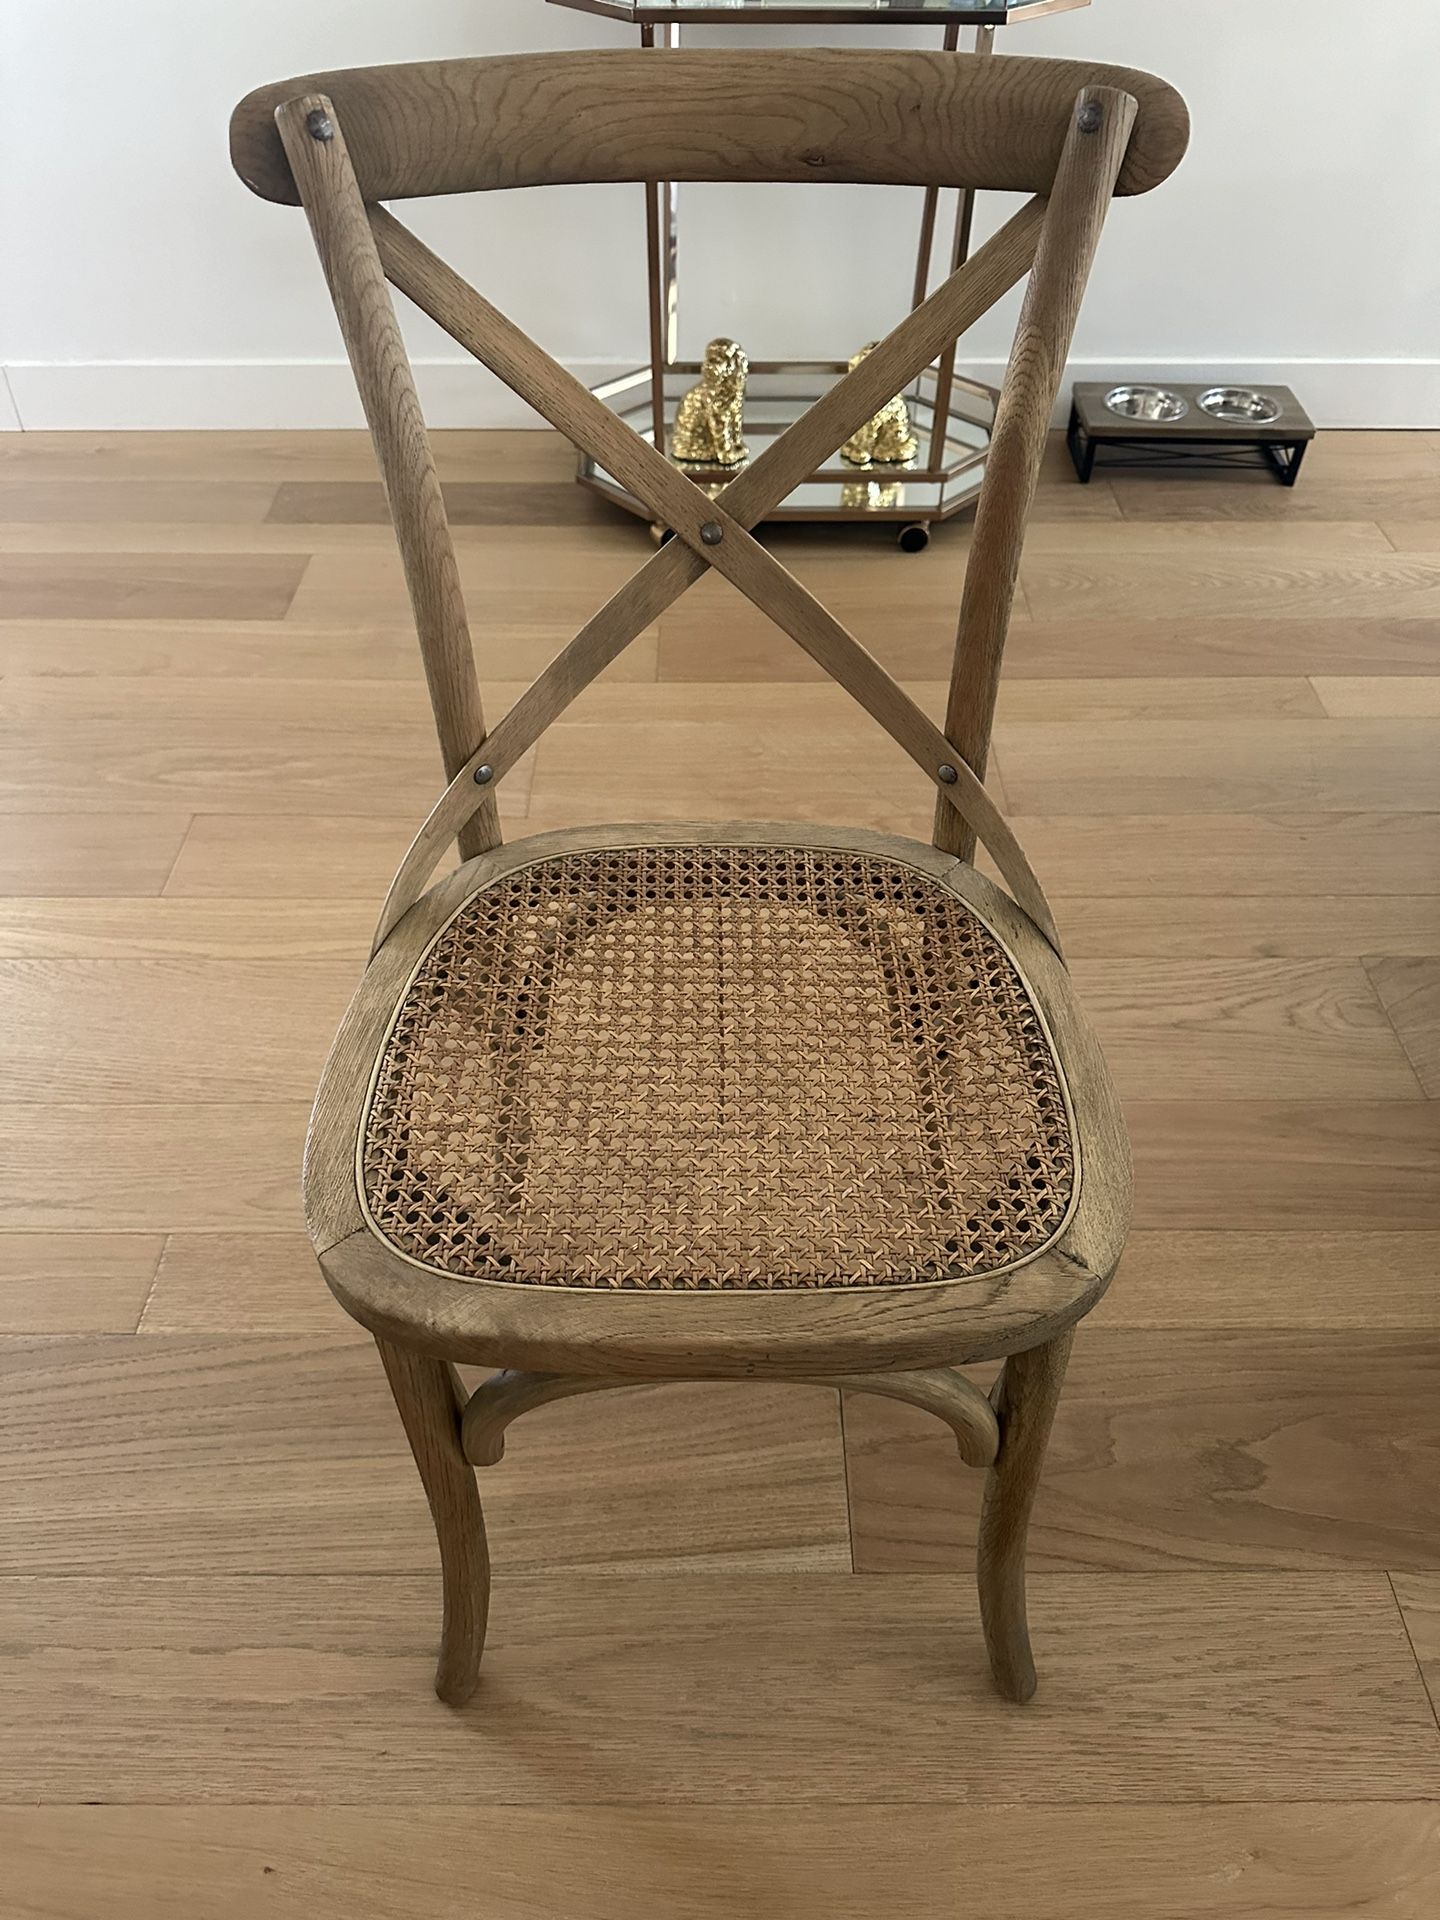 Arhaus Wooden Chairs - 2 